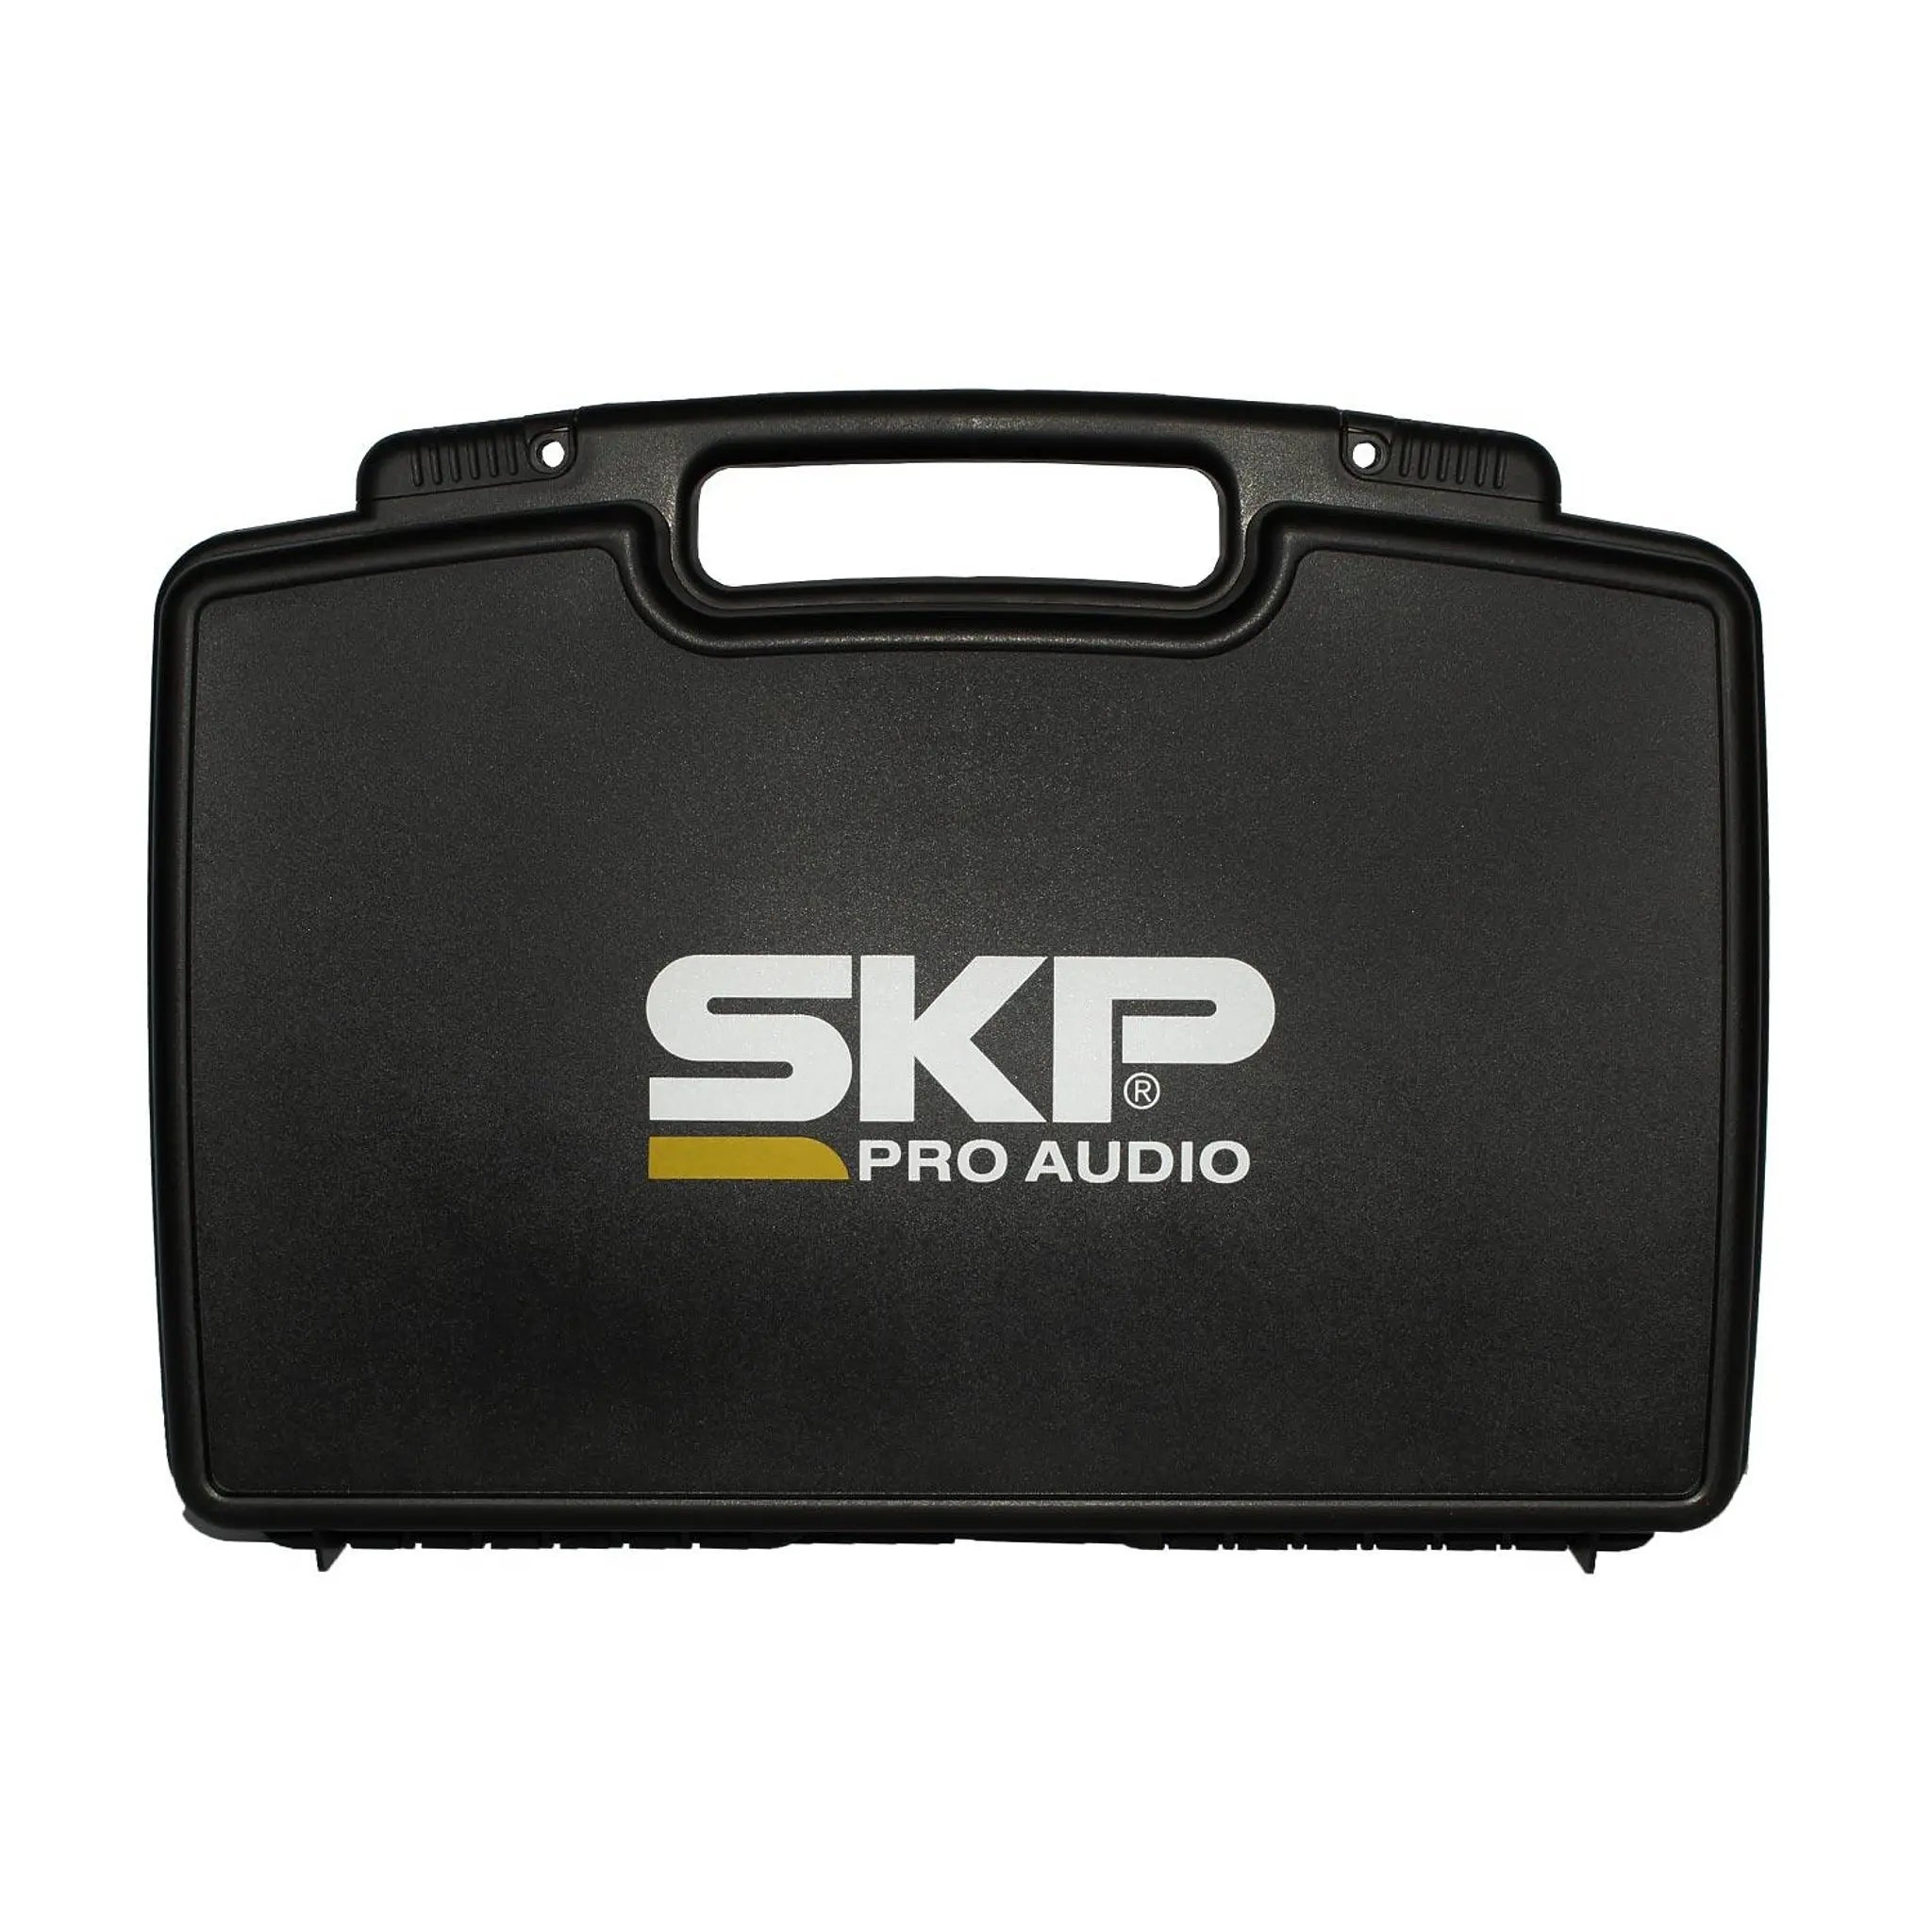 SKP UHF-600 PRO Set Micrófonos Inalámbricos Doble Micrófonos Inalámbricos SKP Pro Audio 